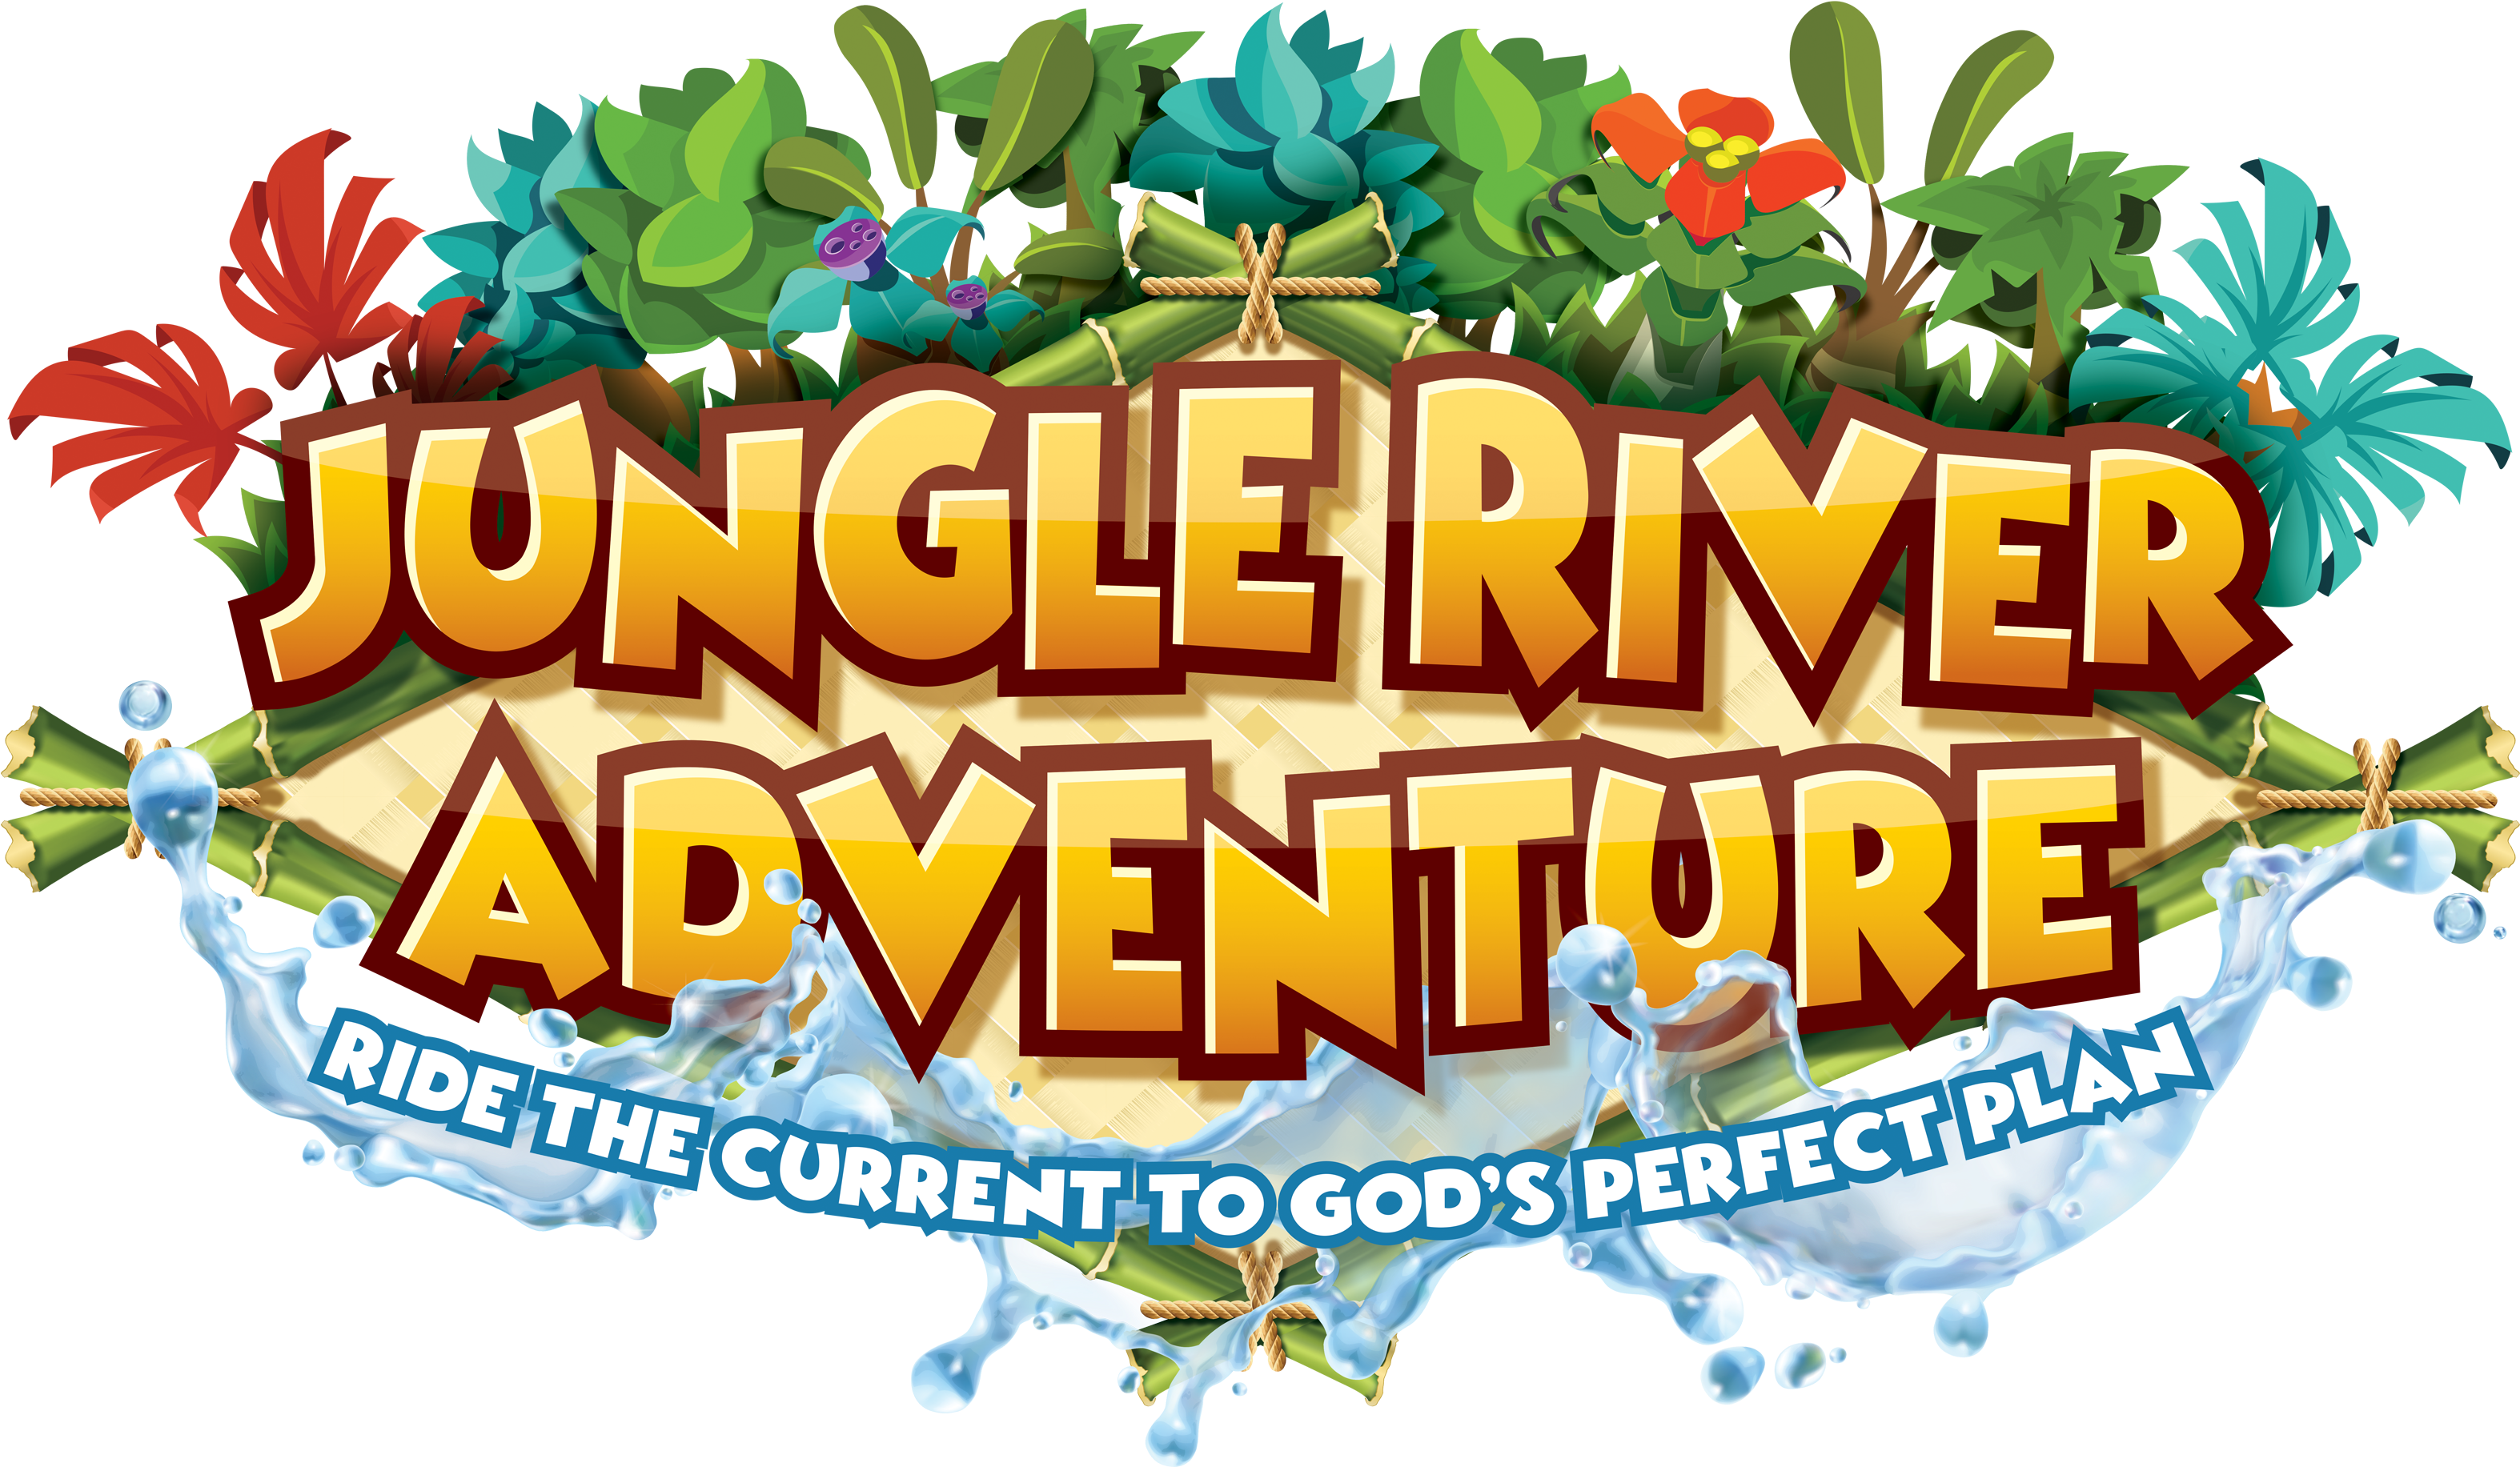 Vacation Bible Study - Jungle River Adventure Vbs (3300x1980)